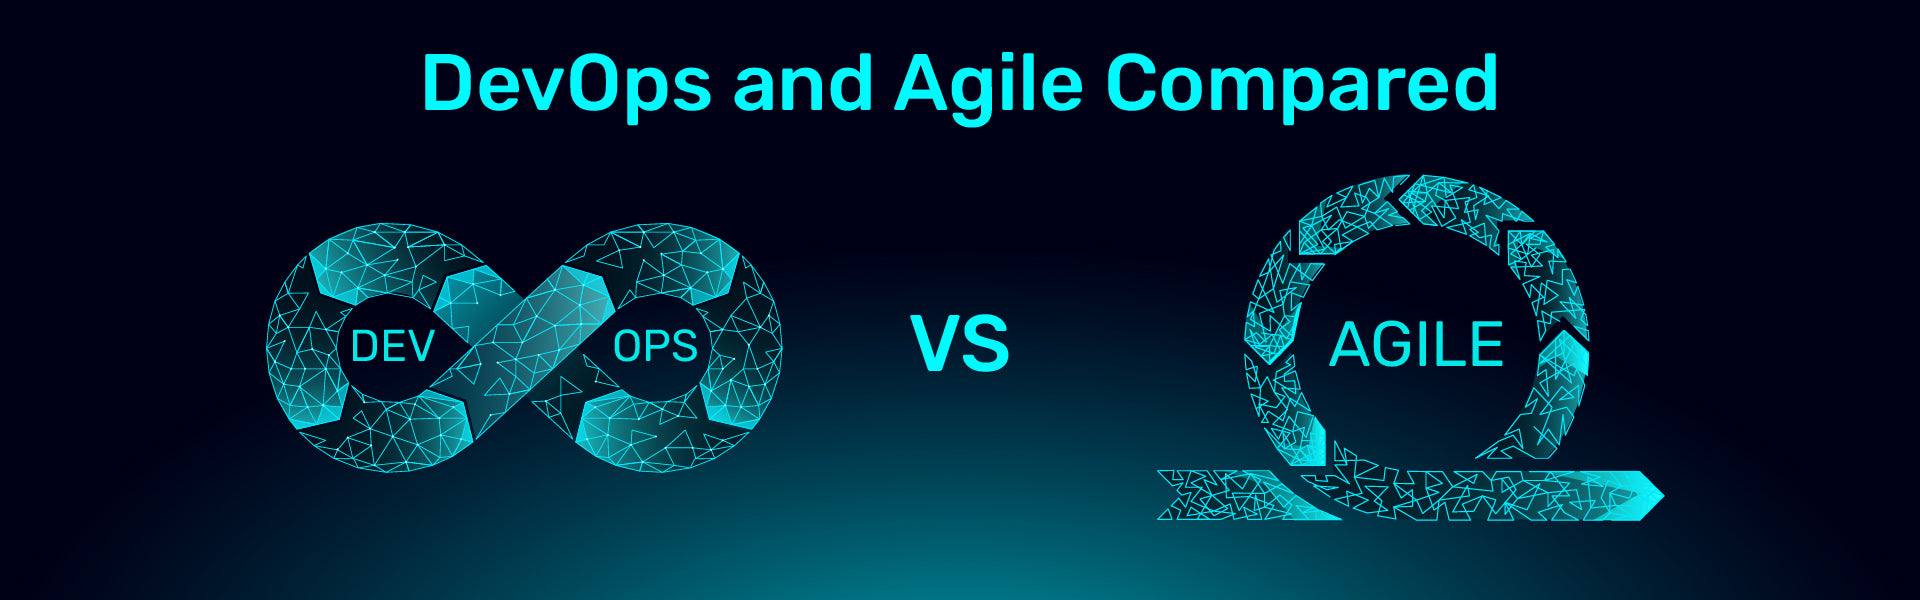 DevOps and Agile Compared.